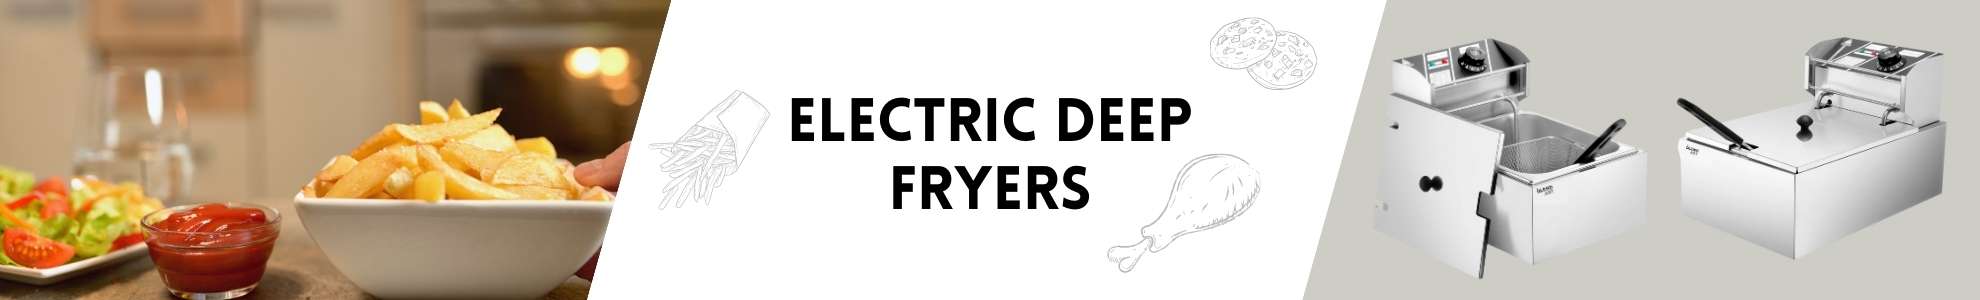 ELECTRIC DEEP FRYERS